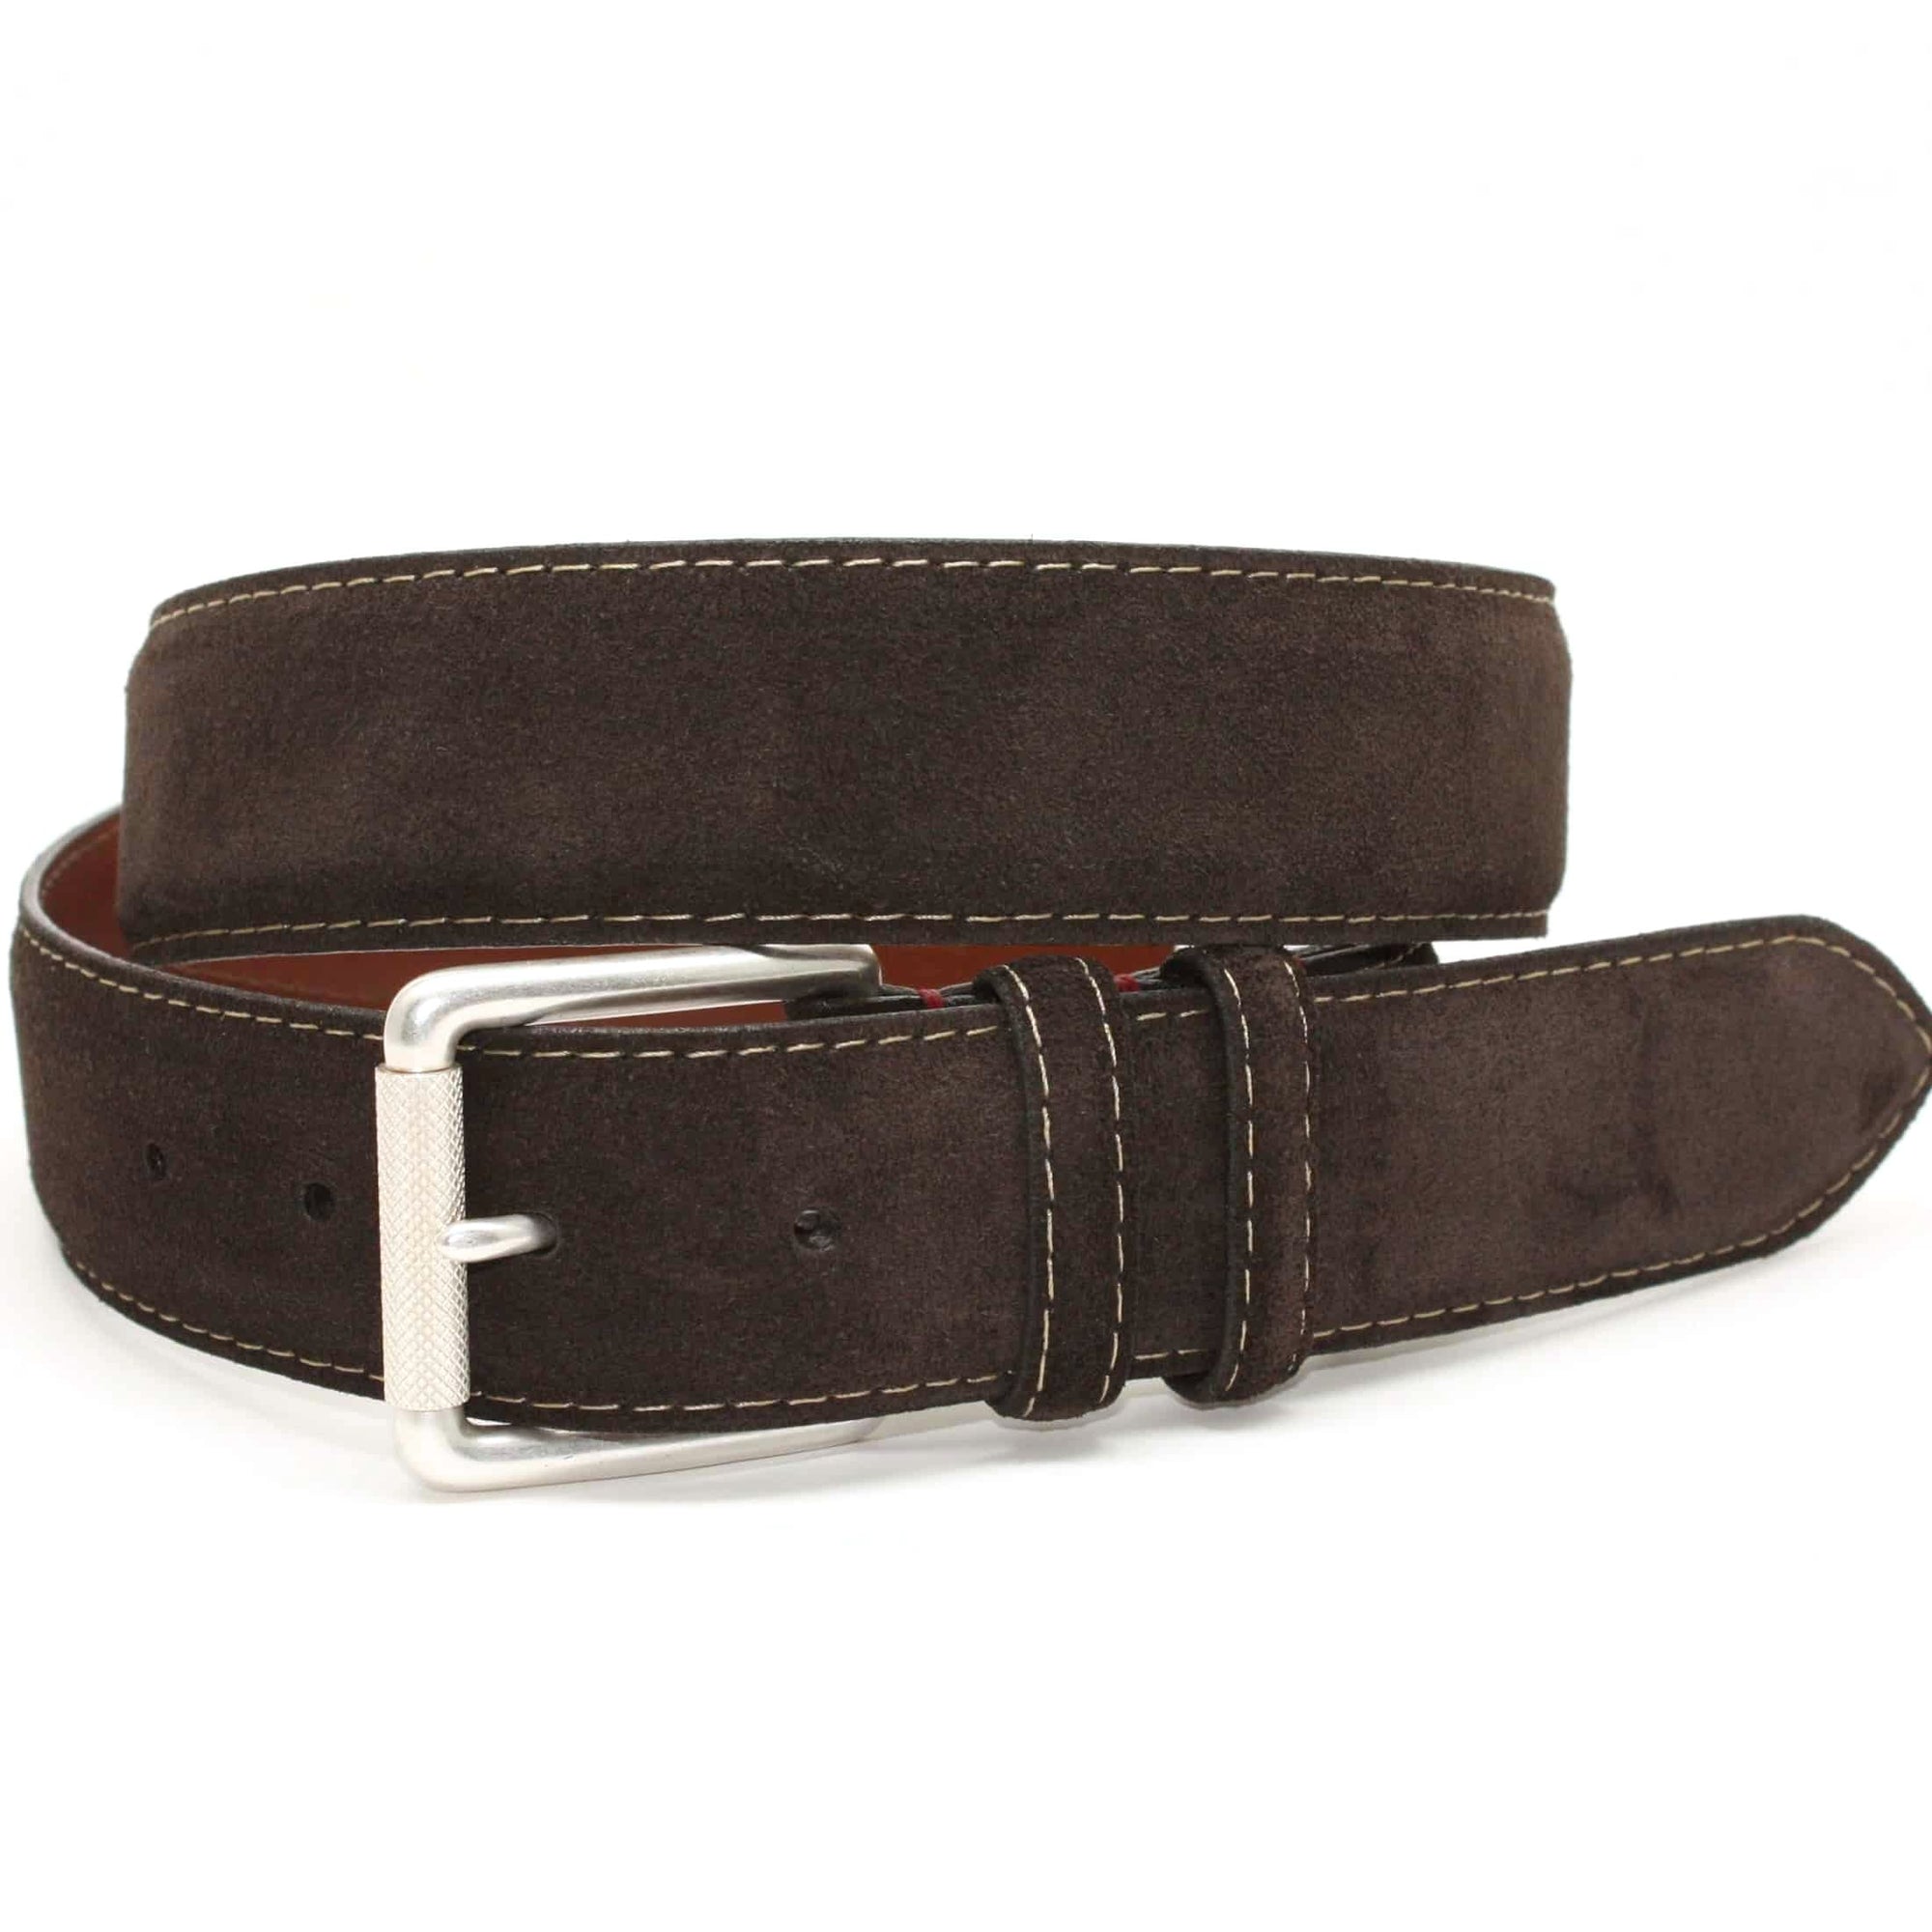 European Sueded Calfskin Belt in Brown by Torino Leather